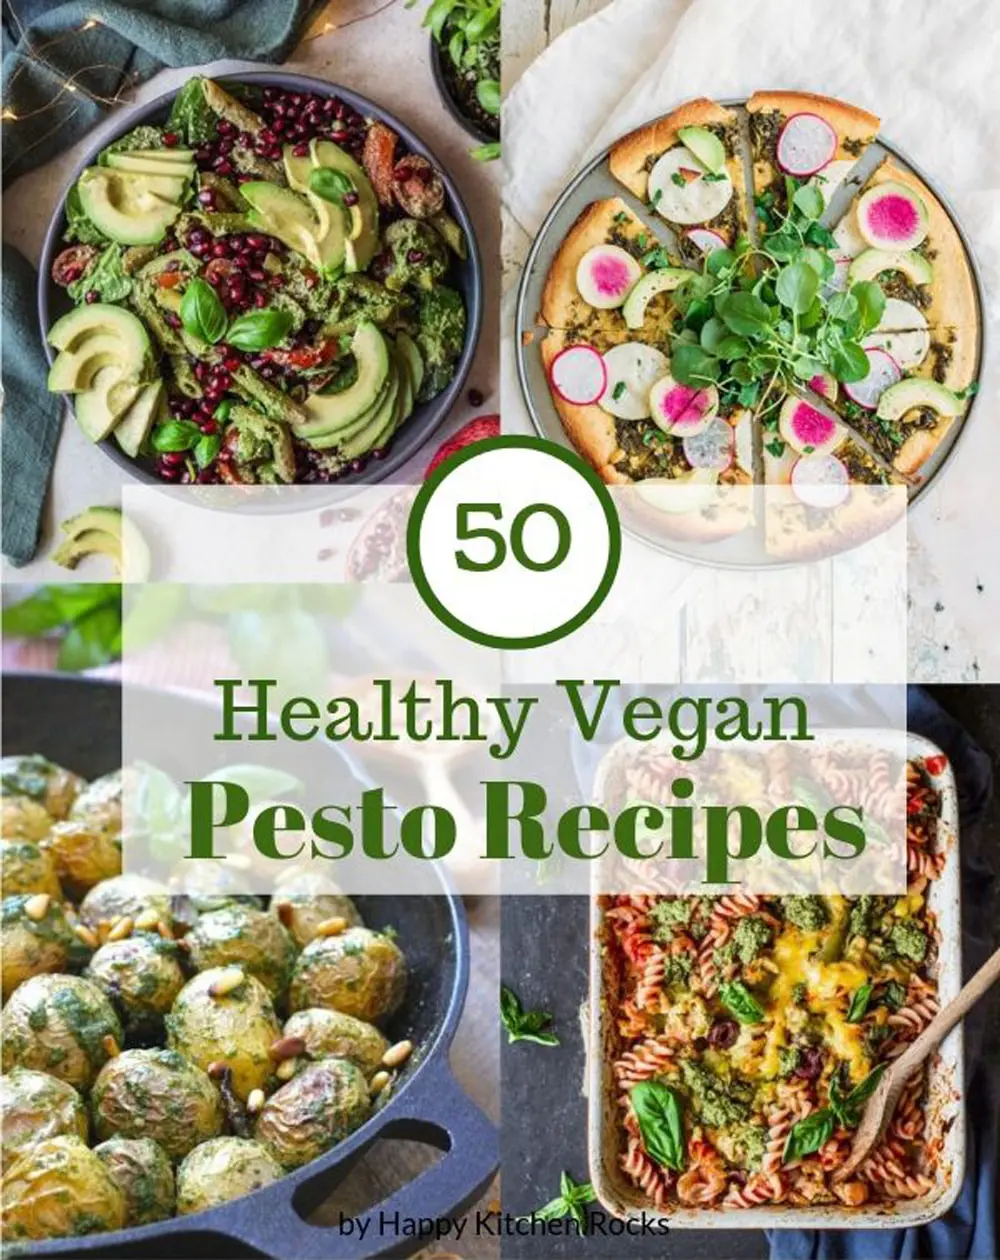 Vegan Recipes with Pesto Pinterest Image with Pesto Pastat Bake, Pesto Pizza, Pesto Potatoes and Salad